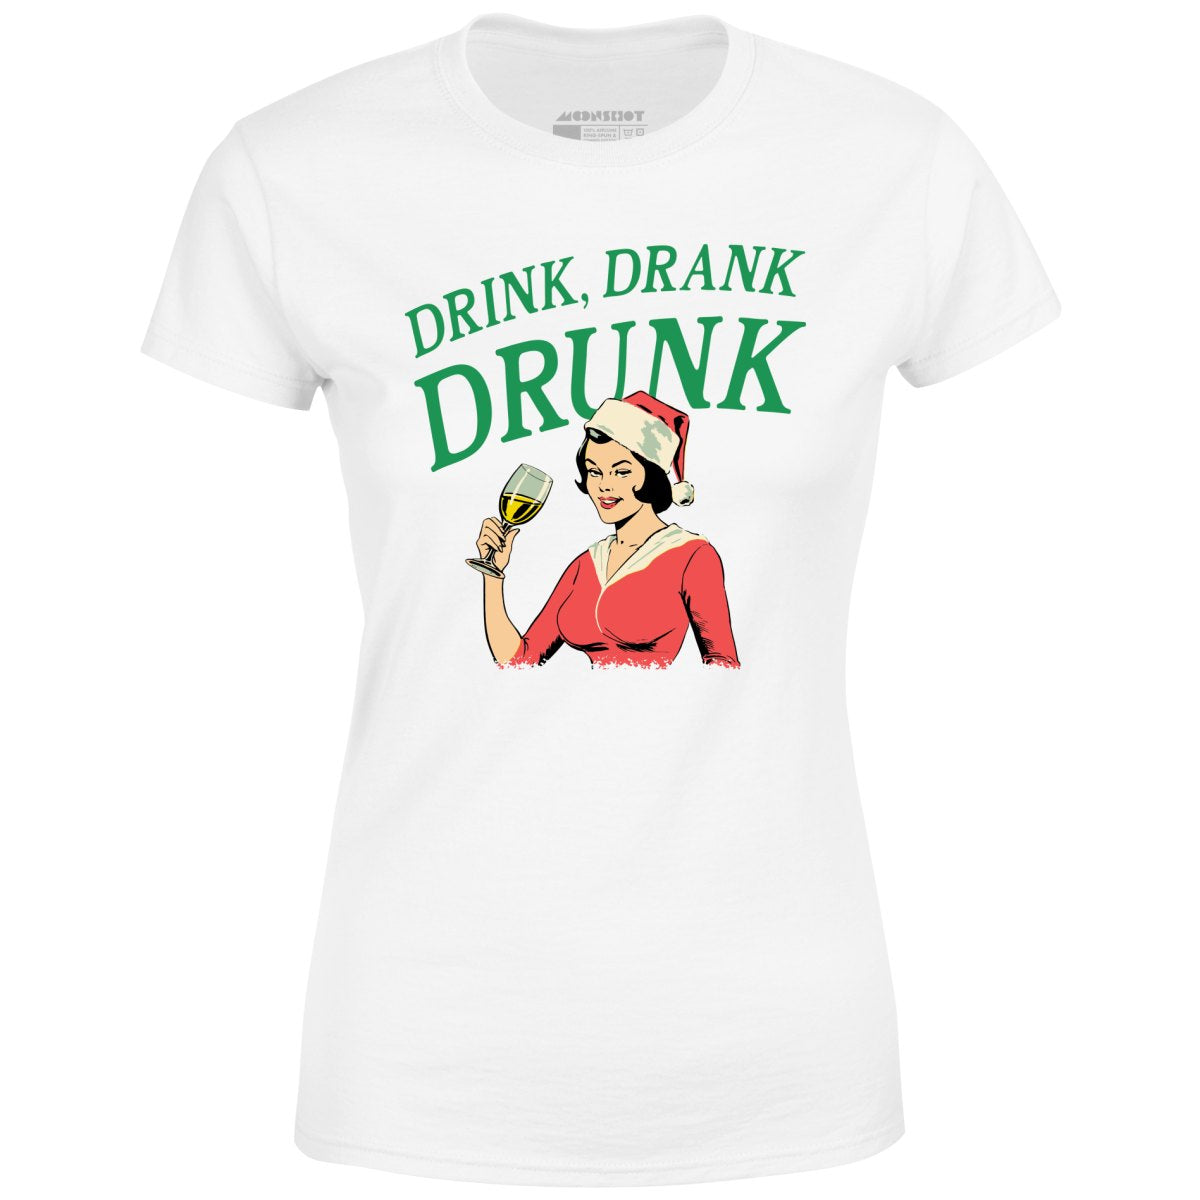 Drink, Drank, Drunk - Women's T-Shirt